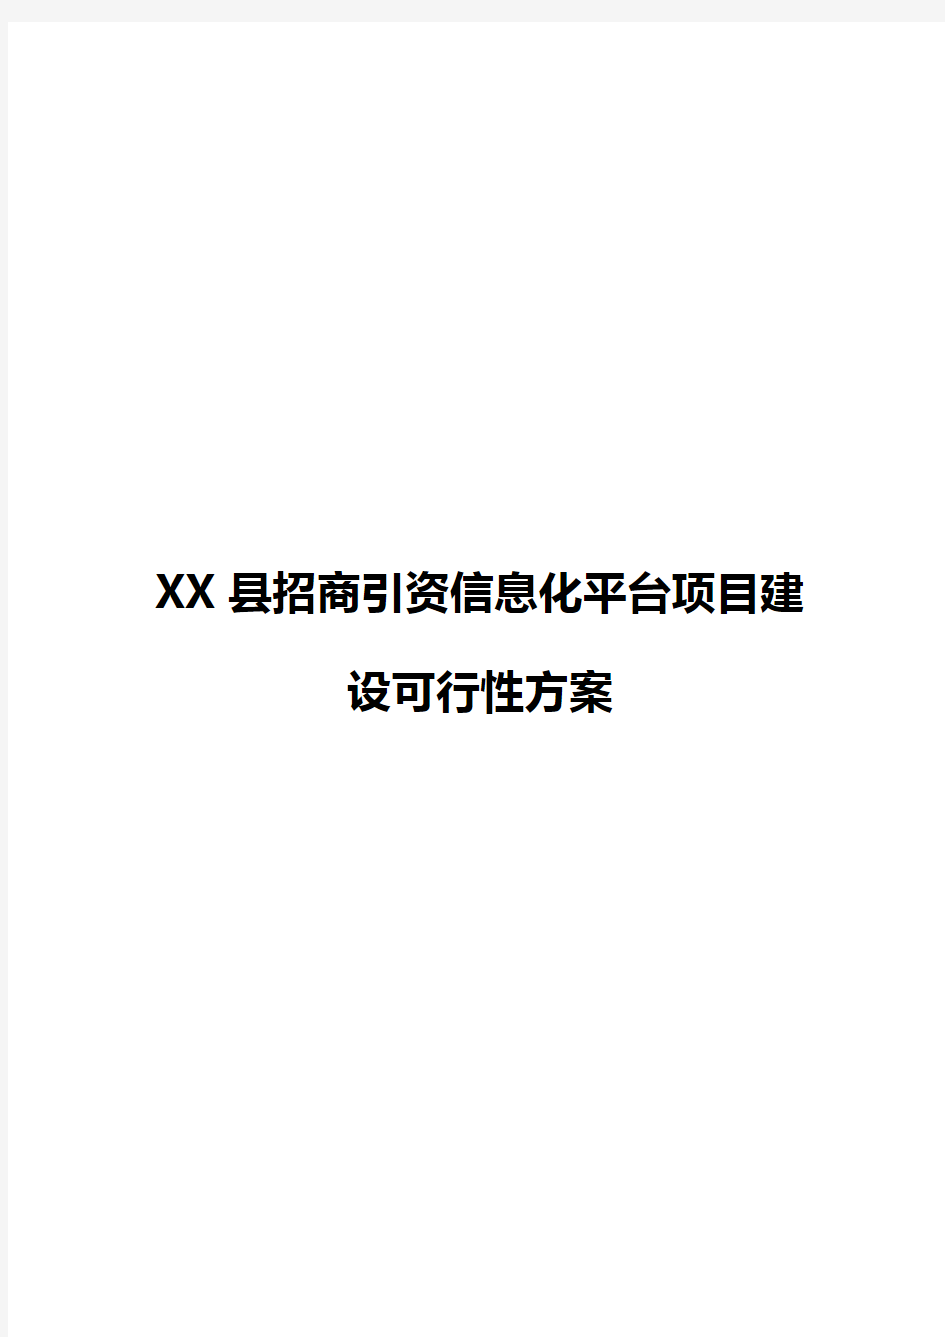 XX县招商引资信息化平台项目建设可行性方案